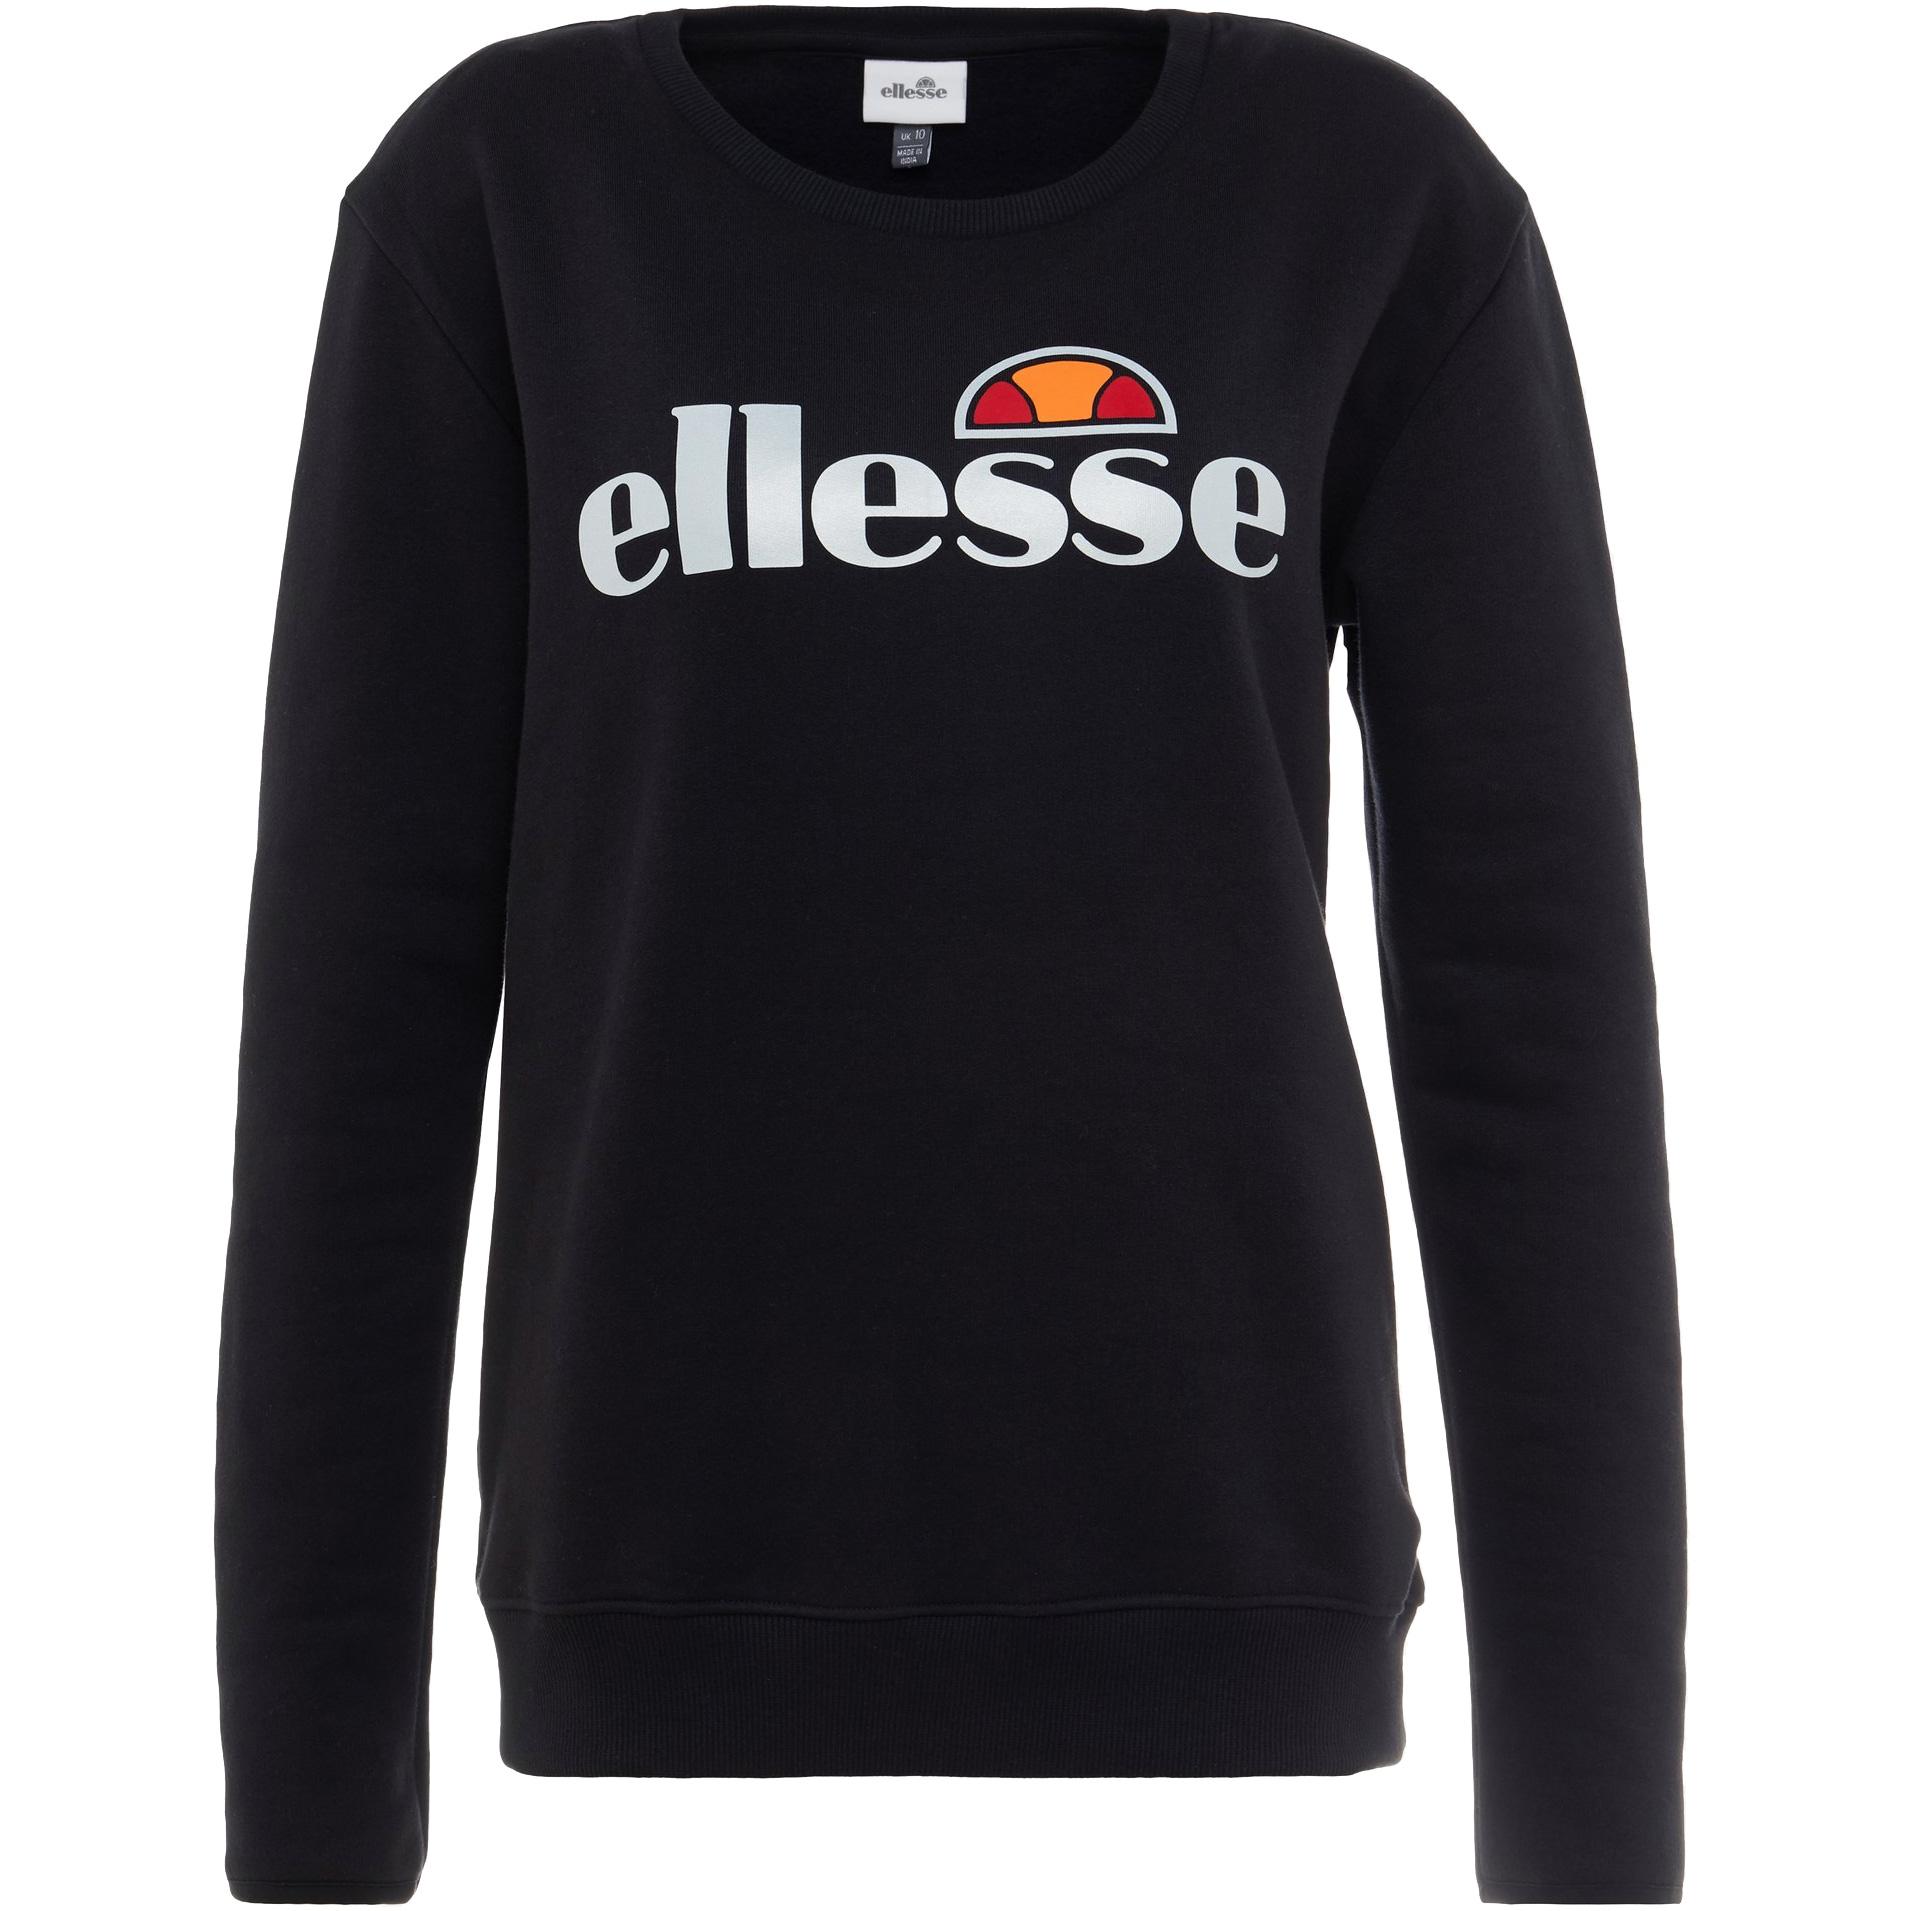 Ellesse Womens Caserta Sweatshirt - Black - Tennisnuts.com